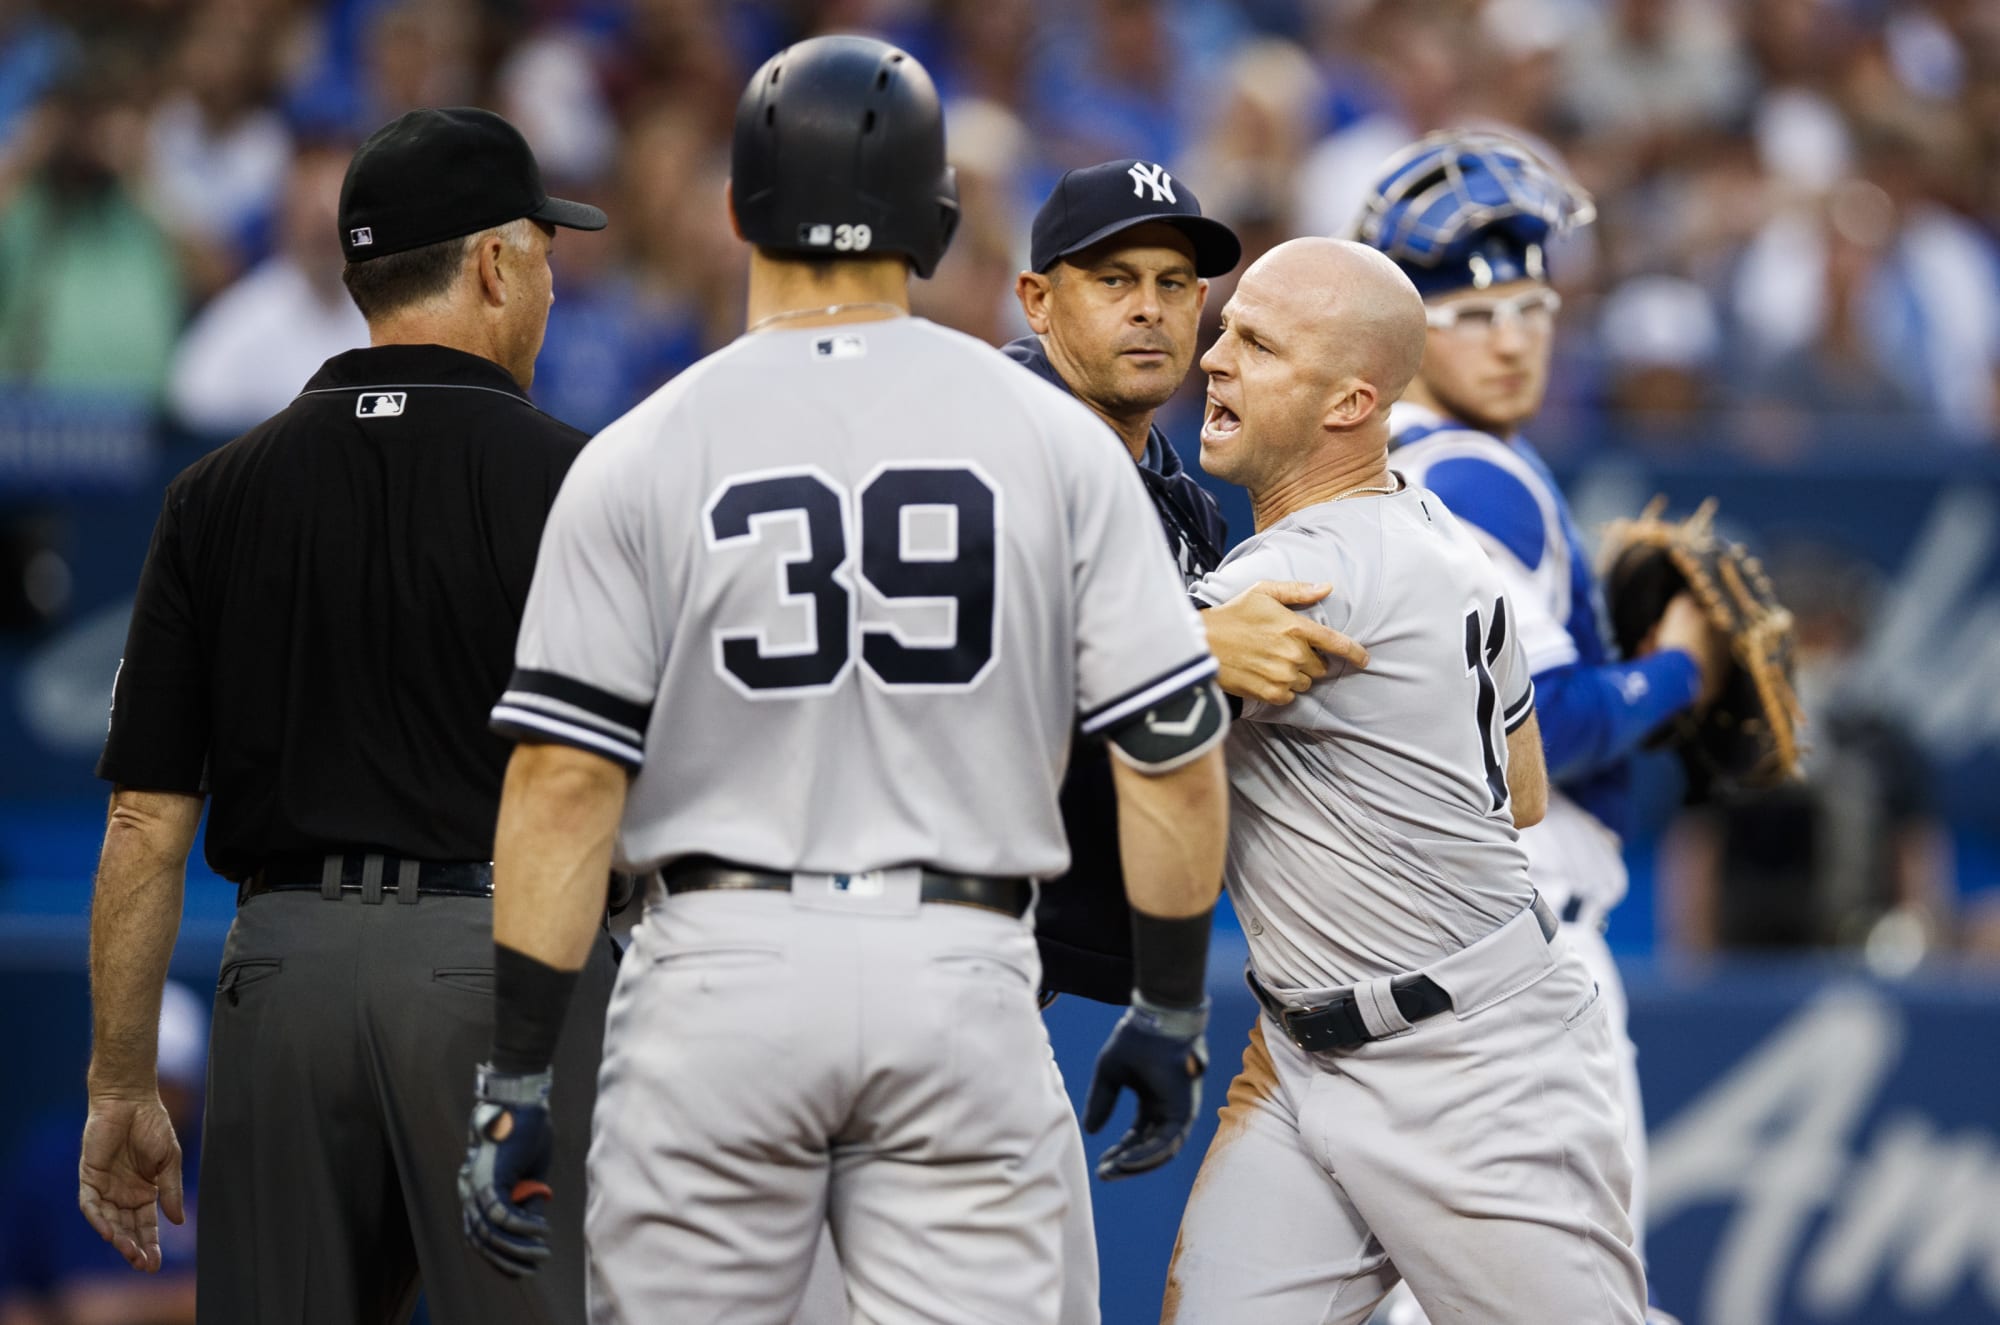 How the Yankees found Brett Gardner, who still makes his presence